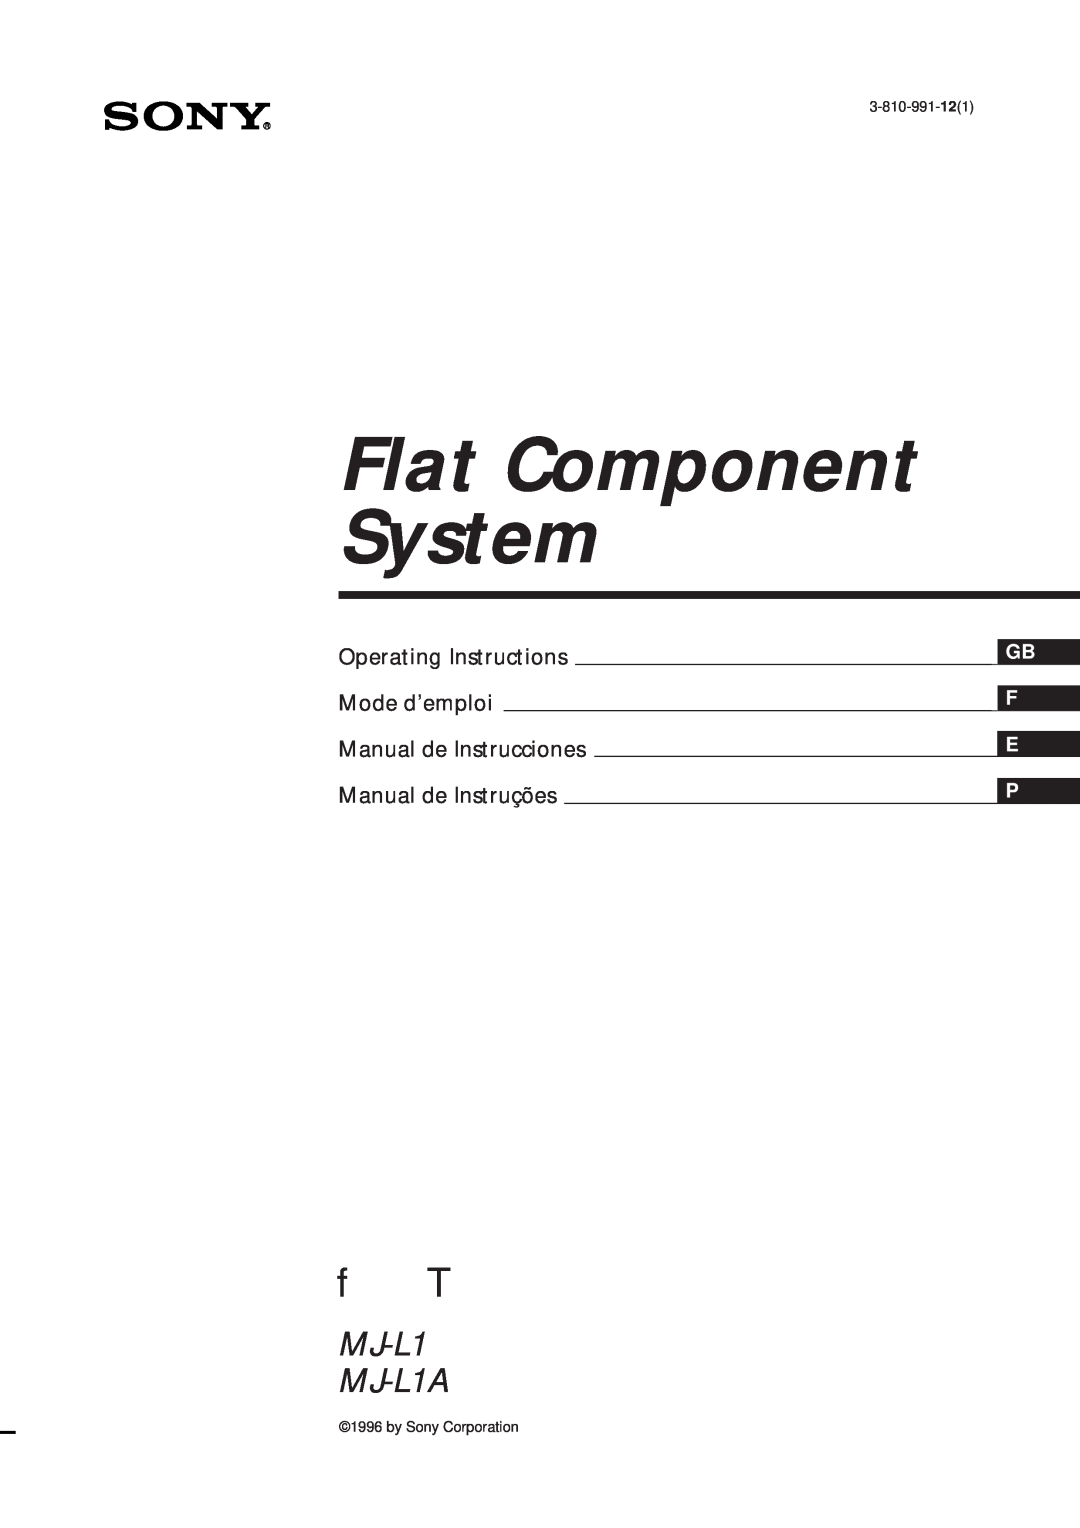 Sony manual Flat Component System, MJ-L1 MJ-L1A, Operating Instructions Mode d’emploi, Gbgb, 3-810-991-121 